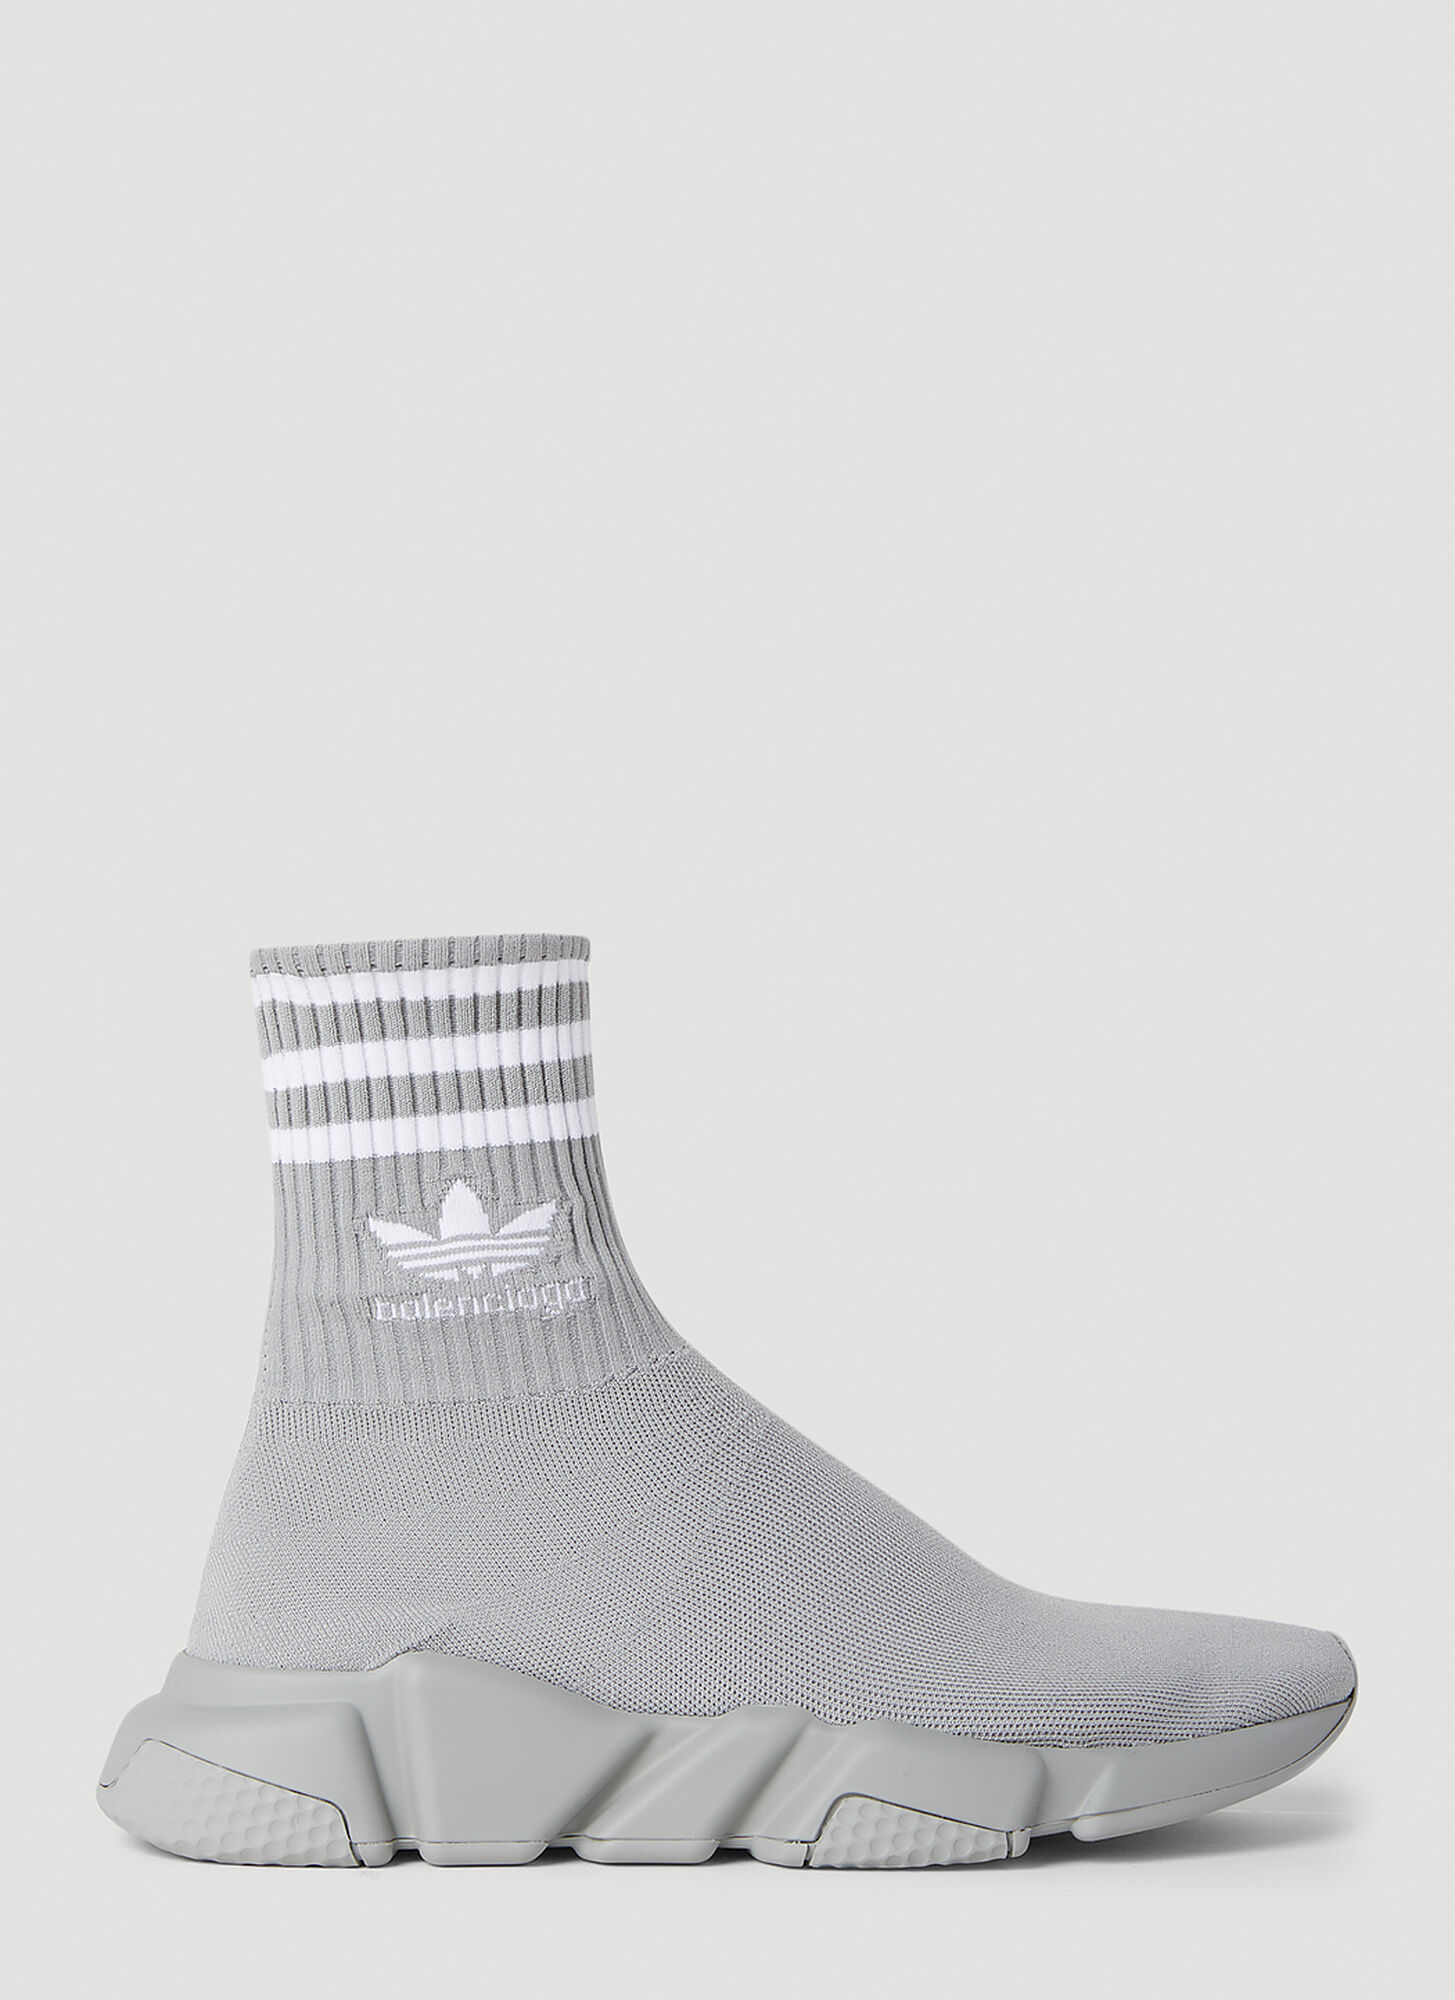 Adidas X Balenciaga Speed Sneakers In Grey